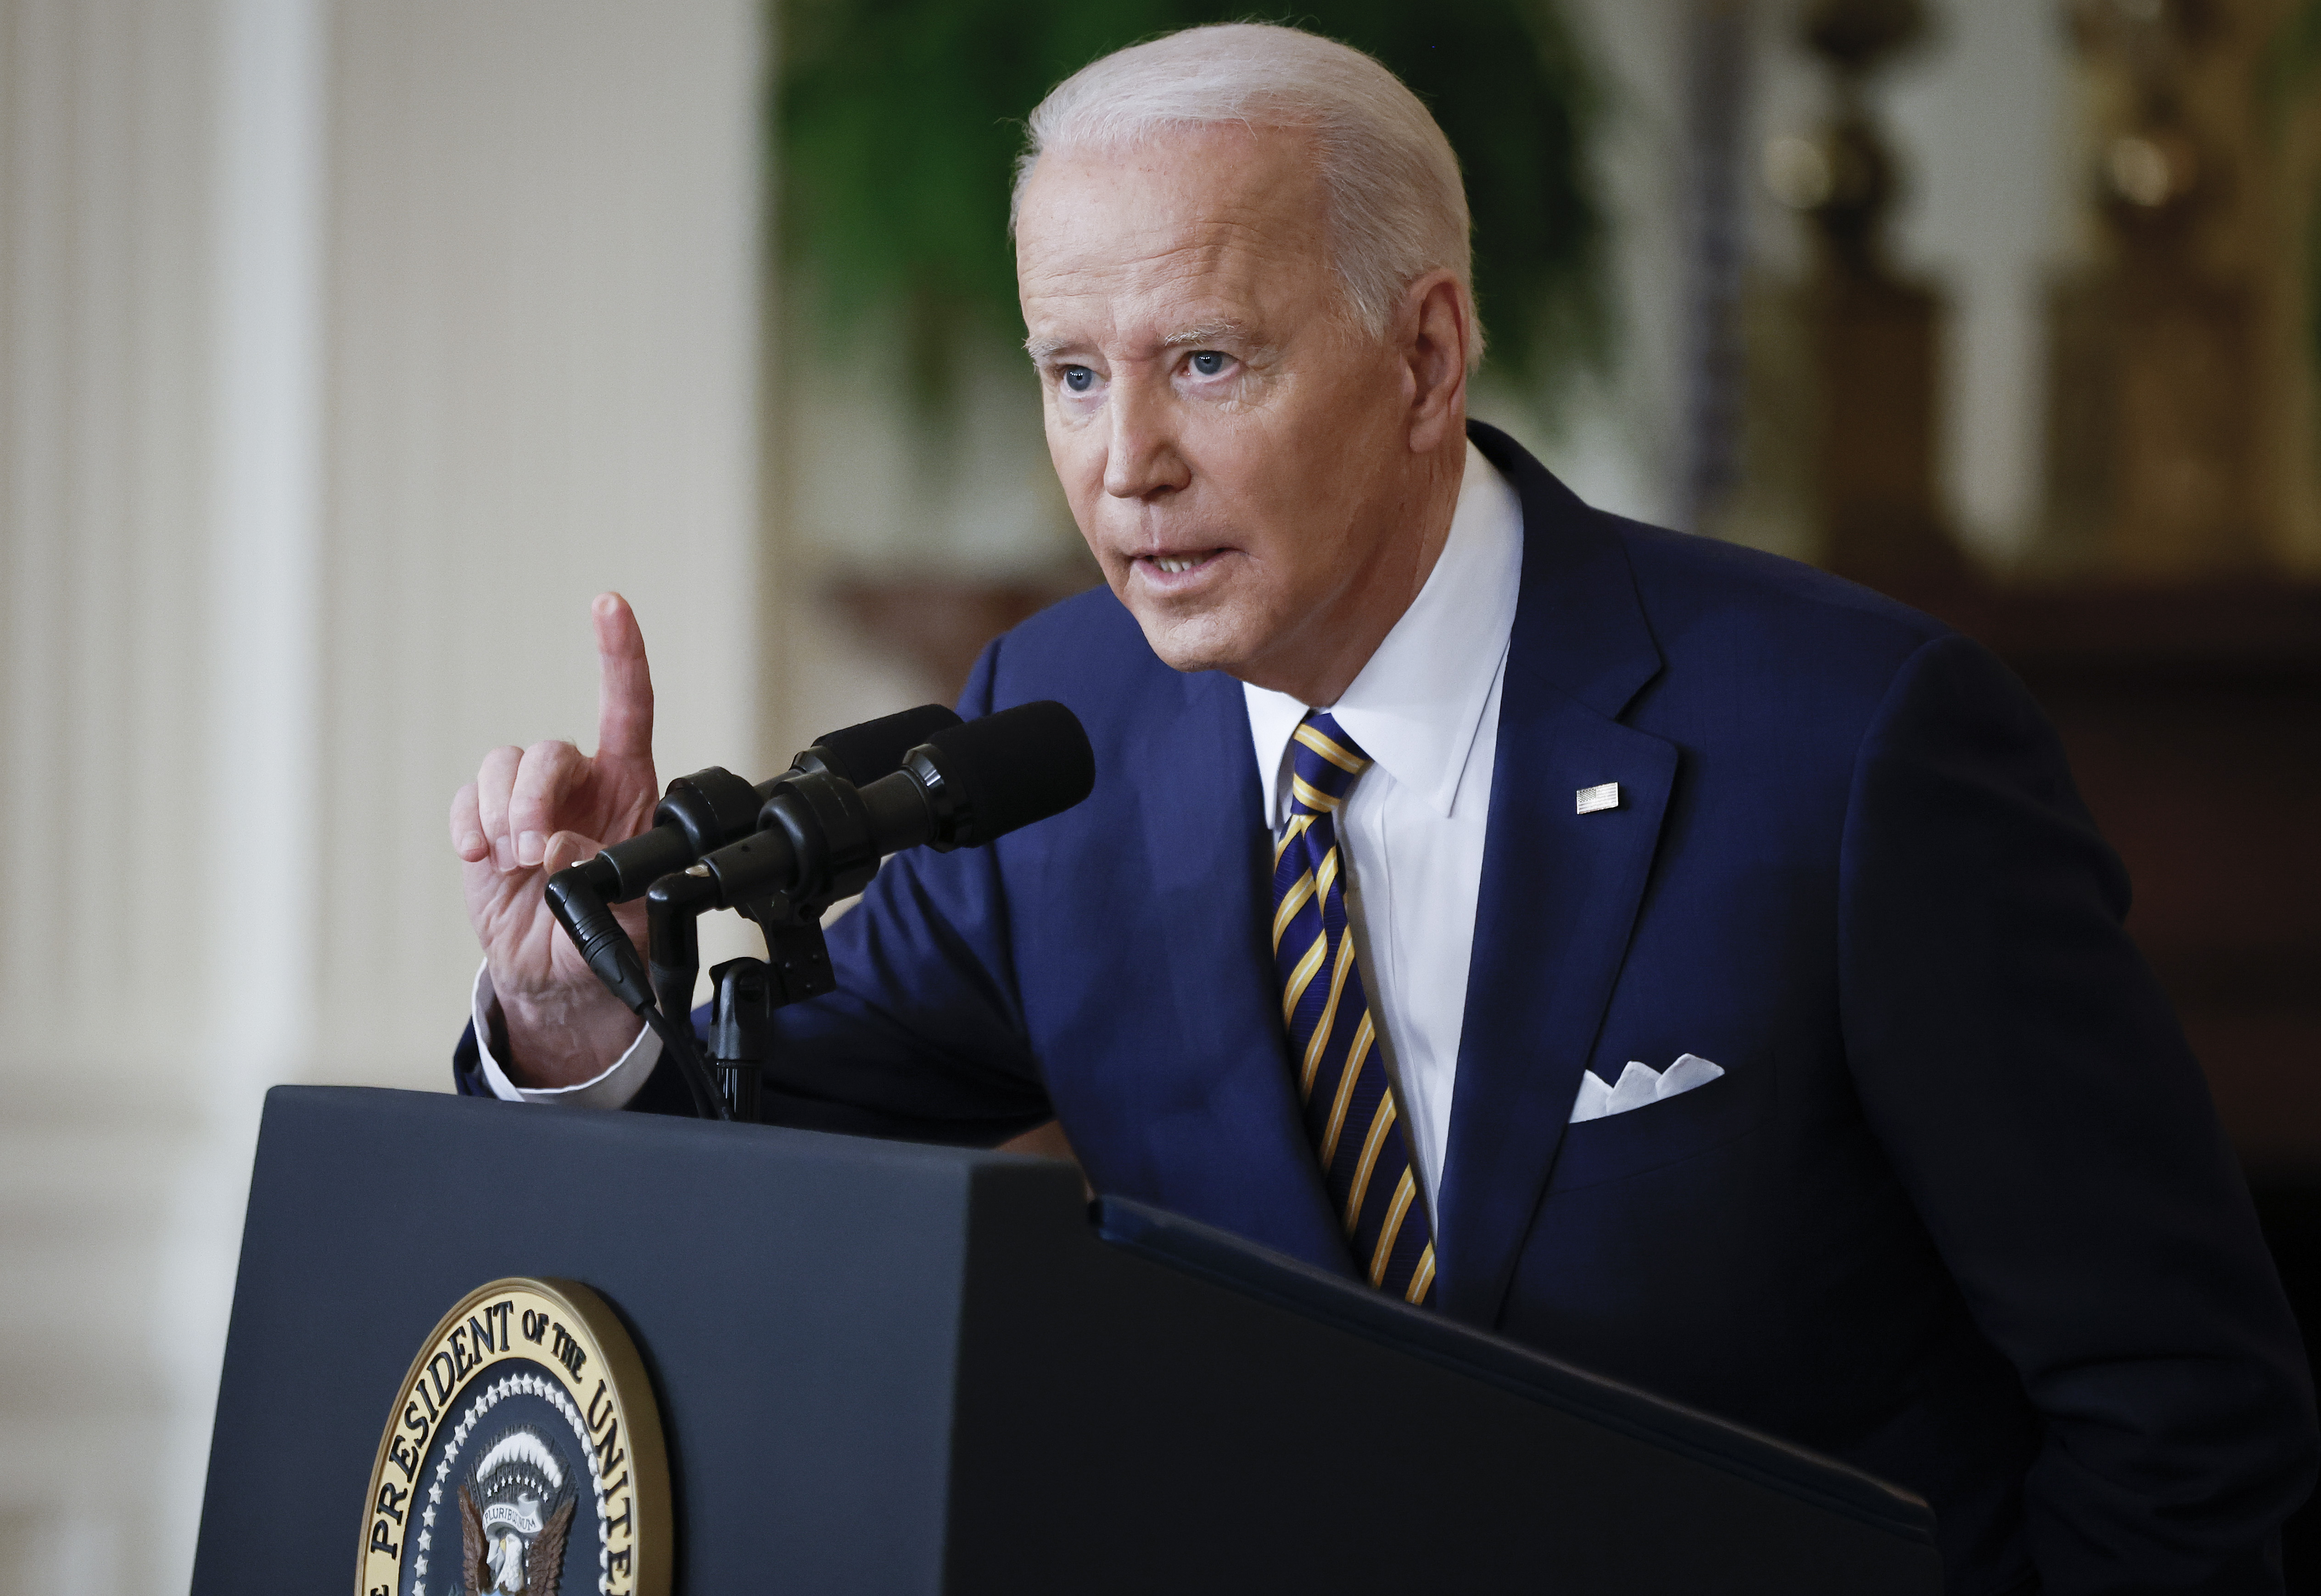 Biden gives White House press briefing